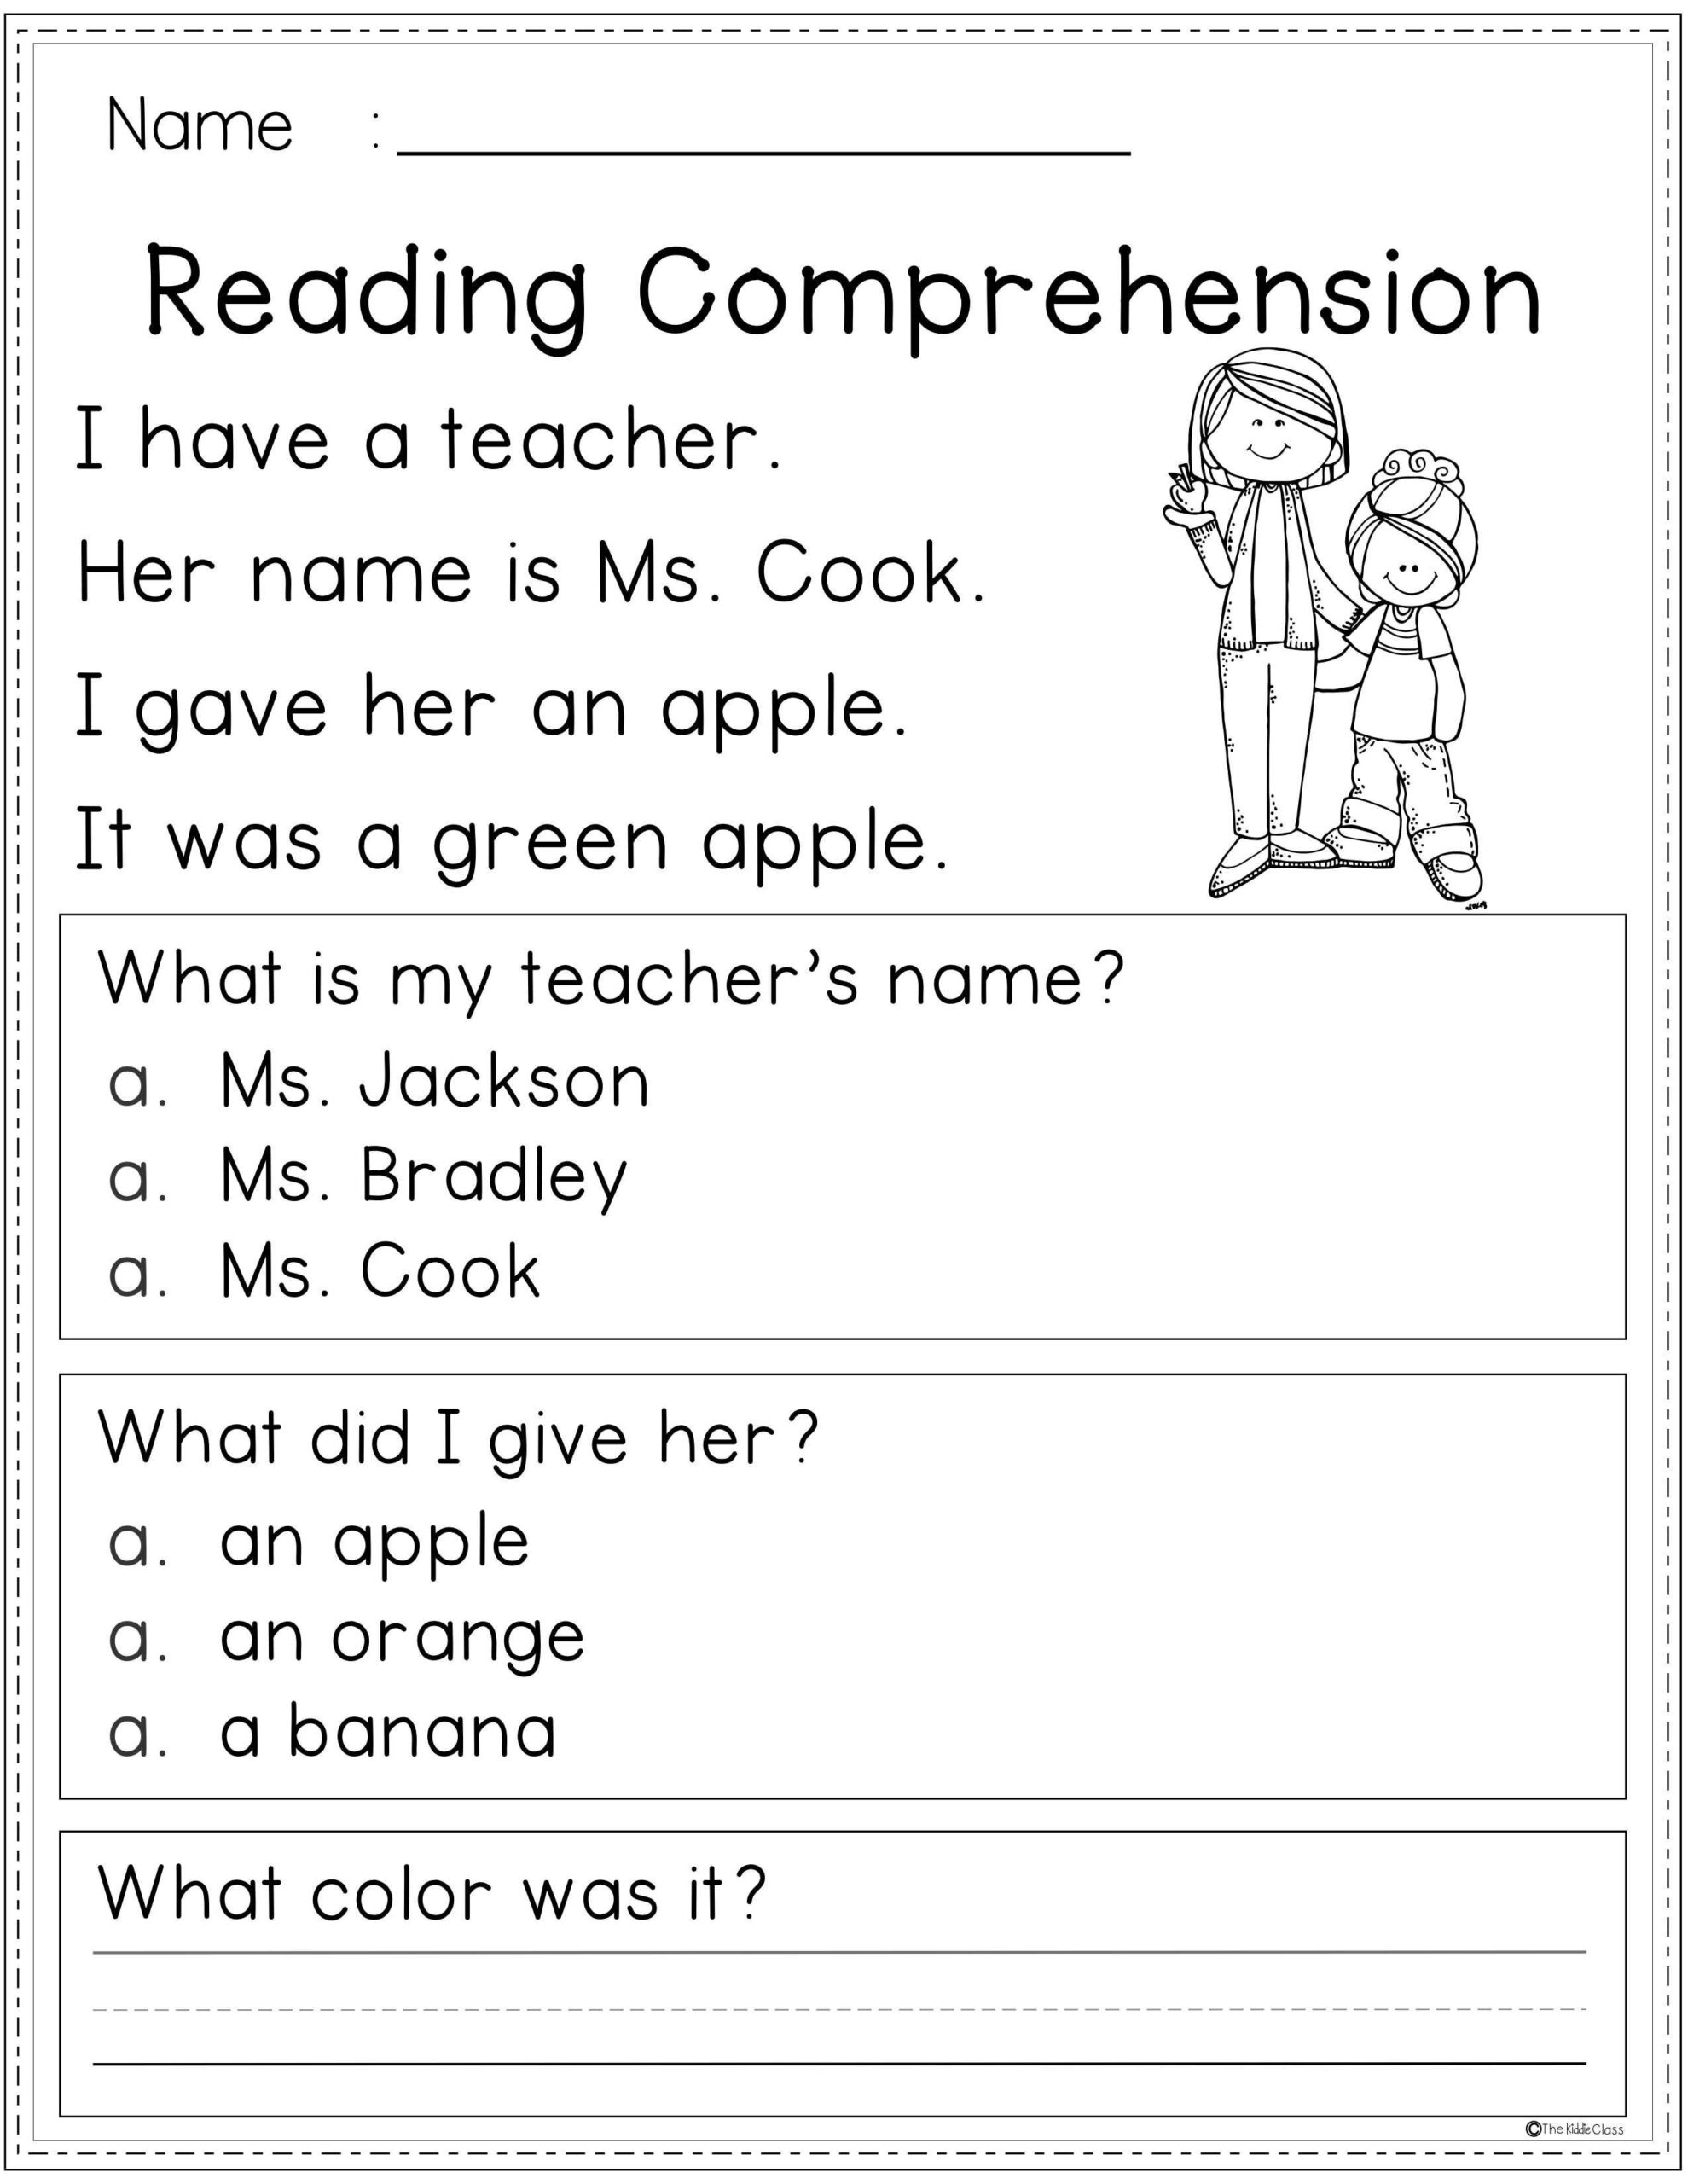 free-printable-reading-comprehension-worksheets-for-1st-graders